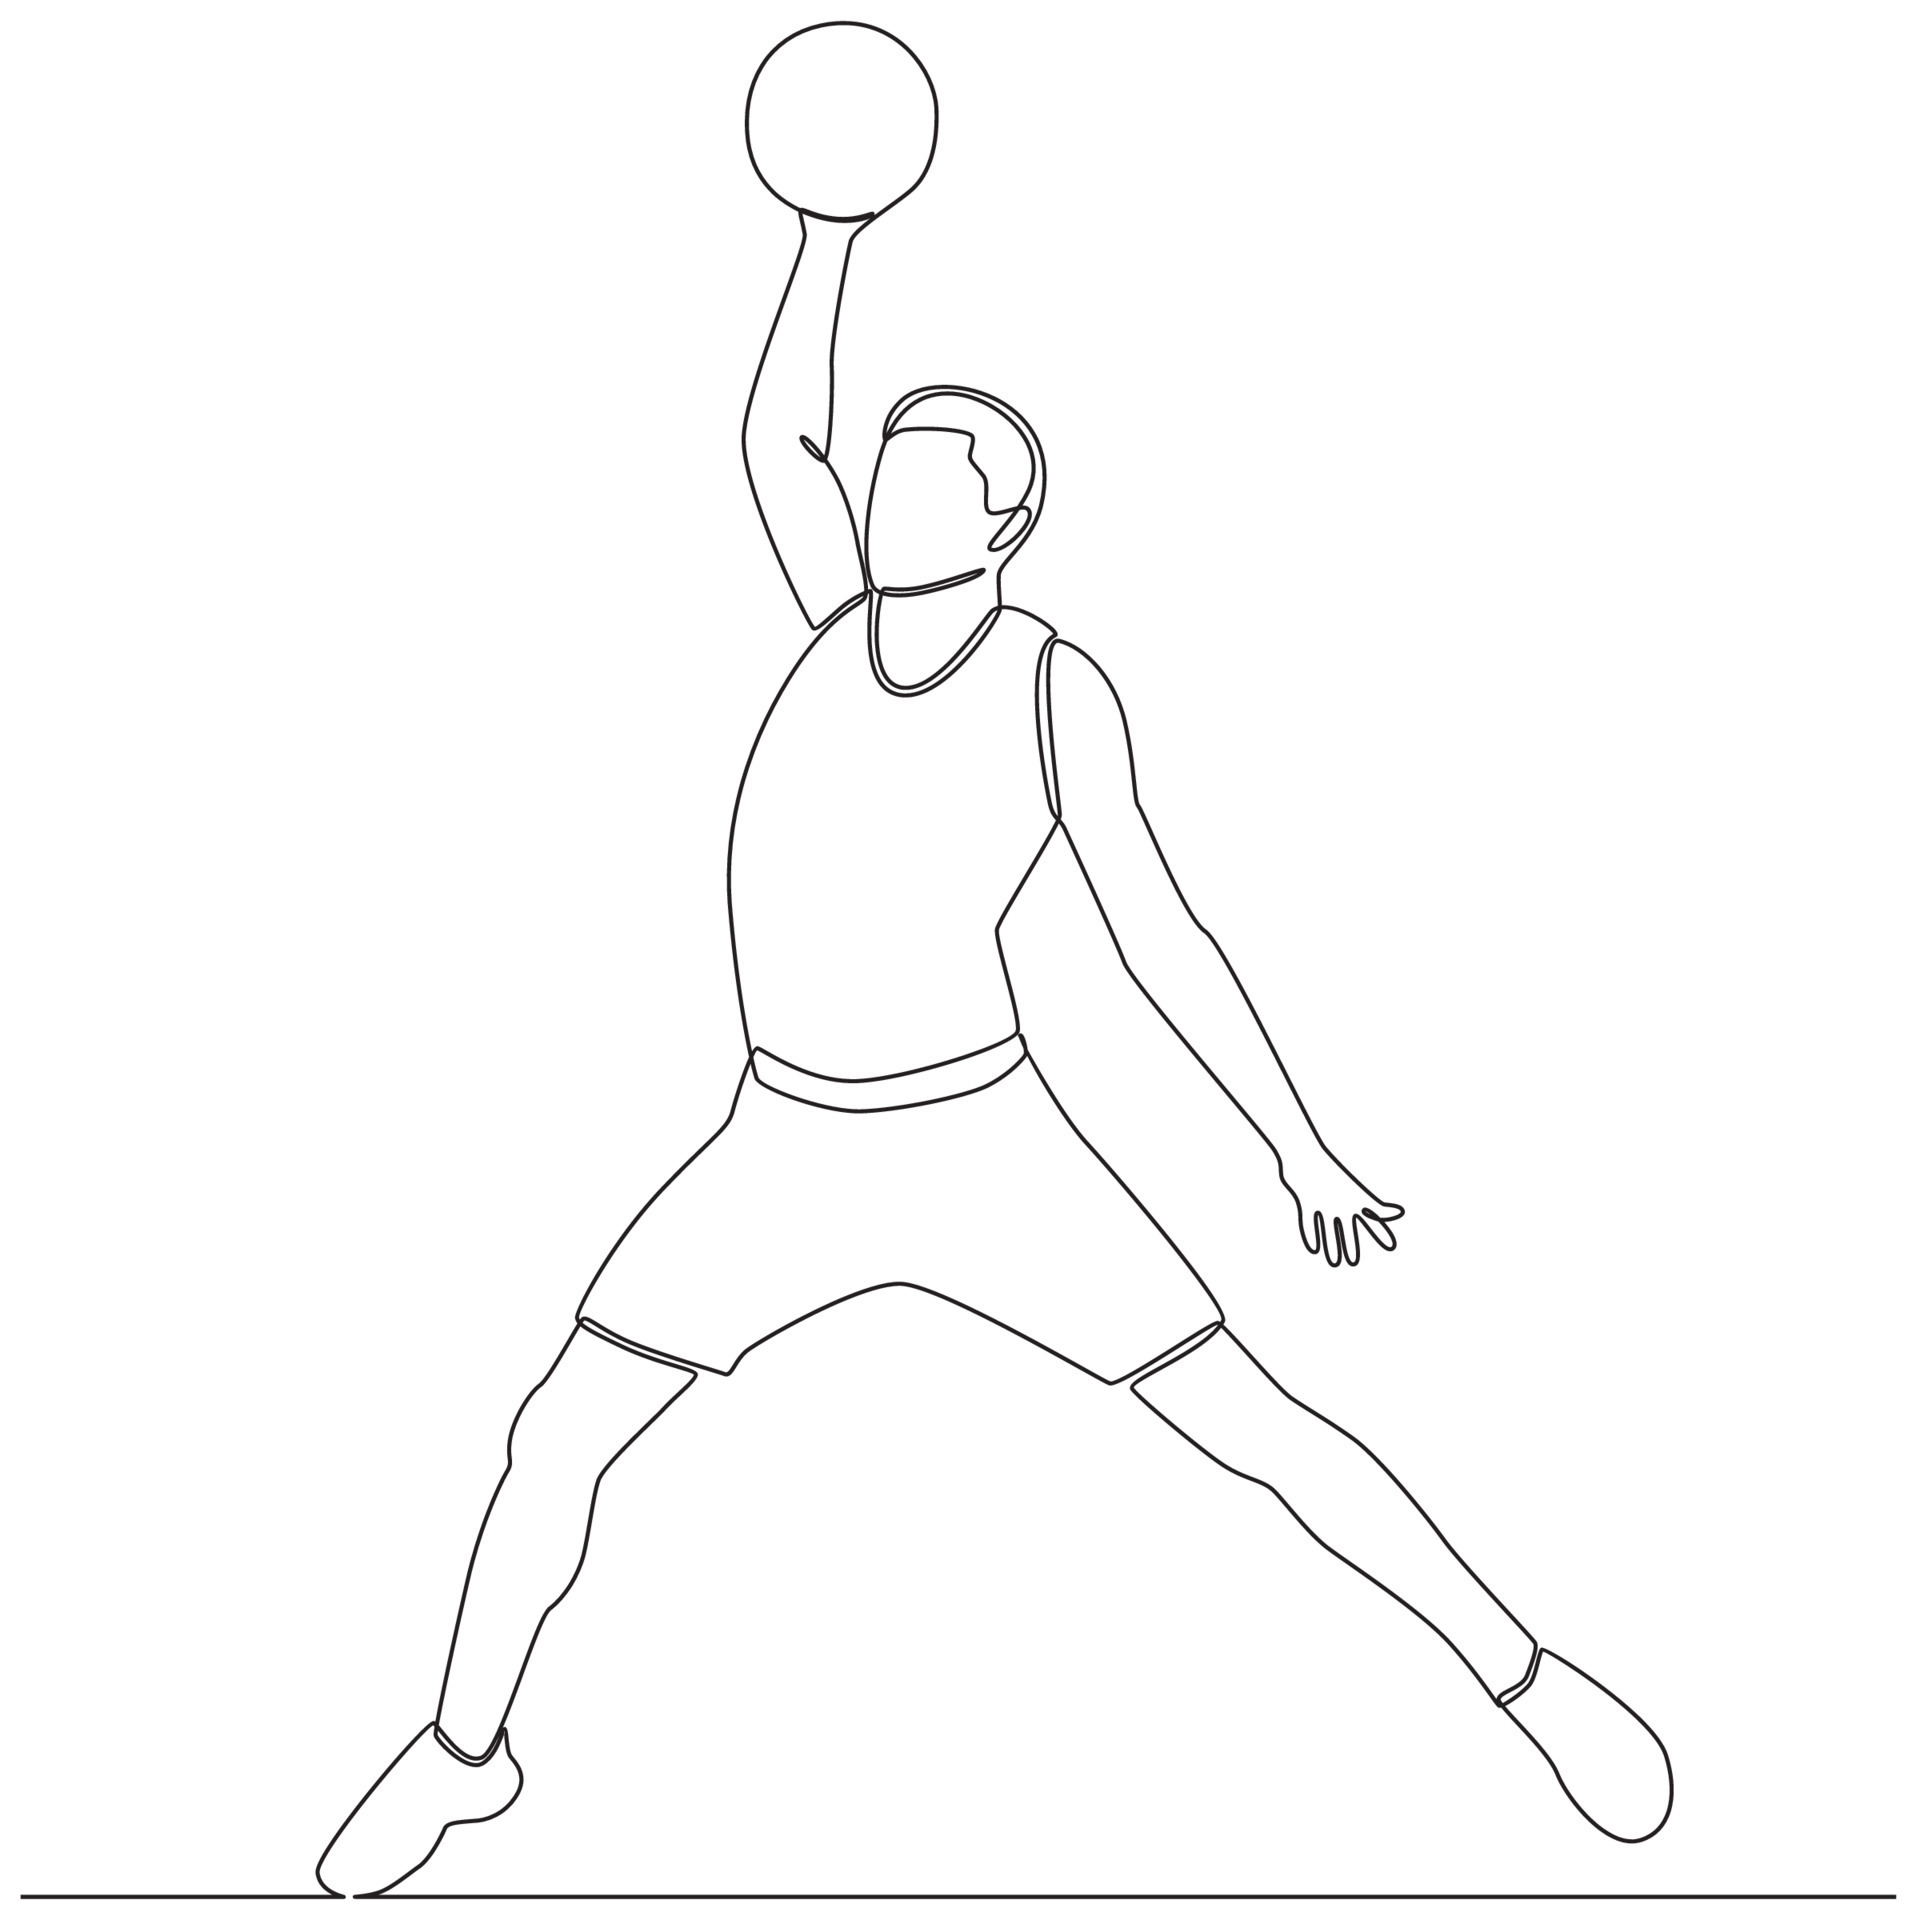 Basketball Sketches  Sports drawings Basketball drawings Sketches